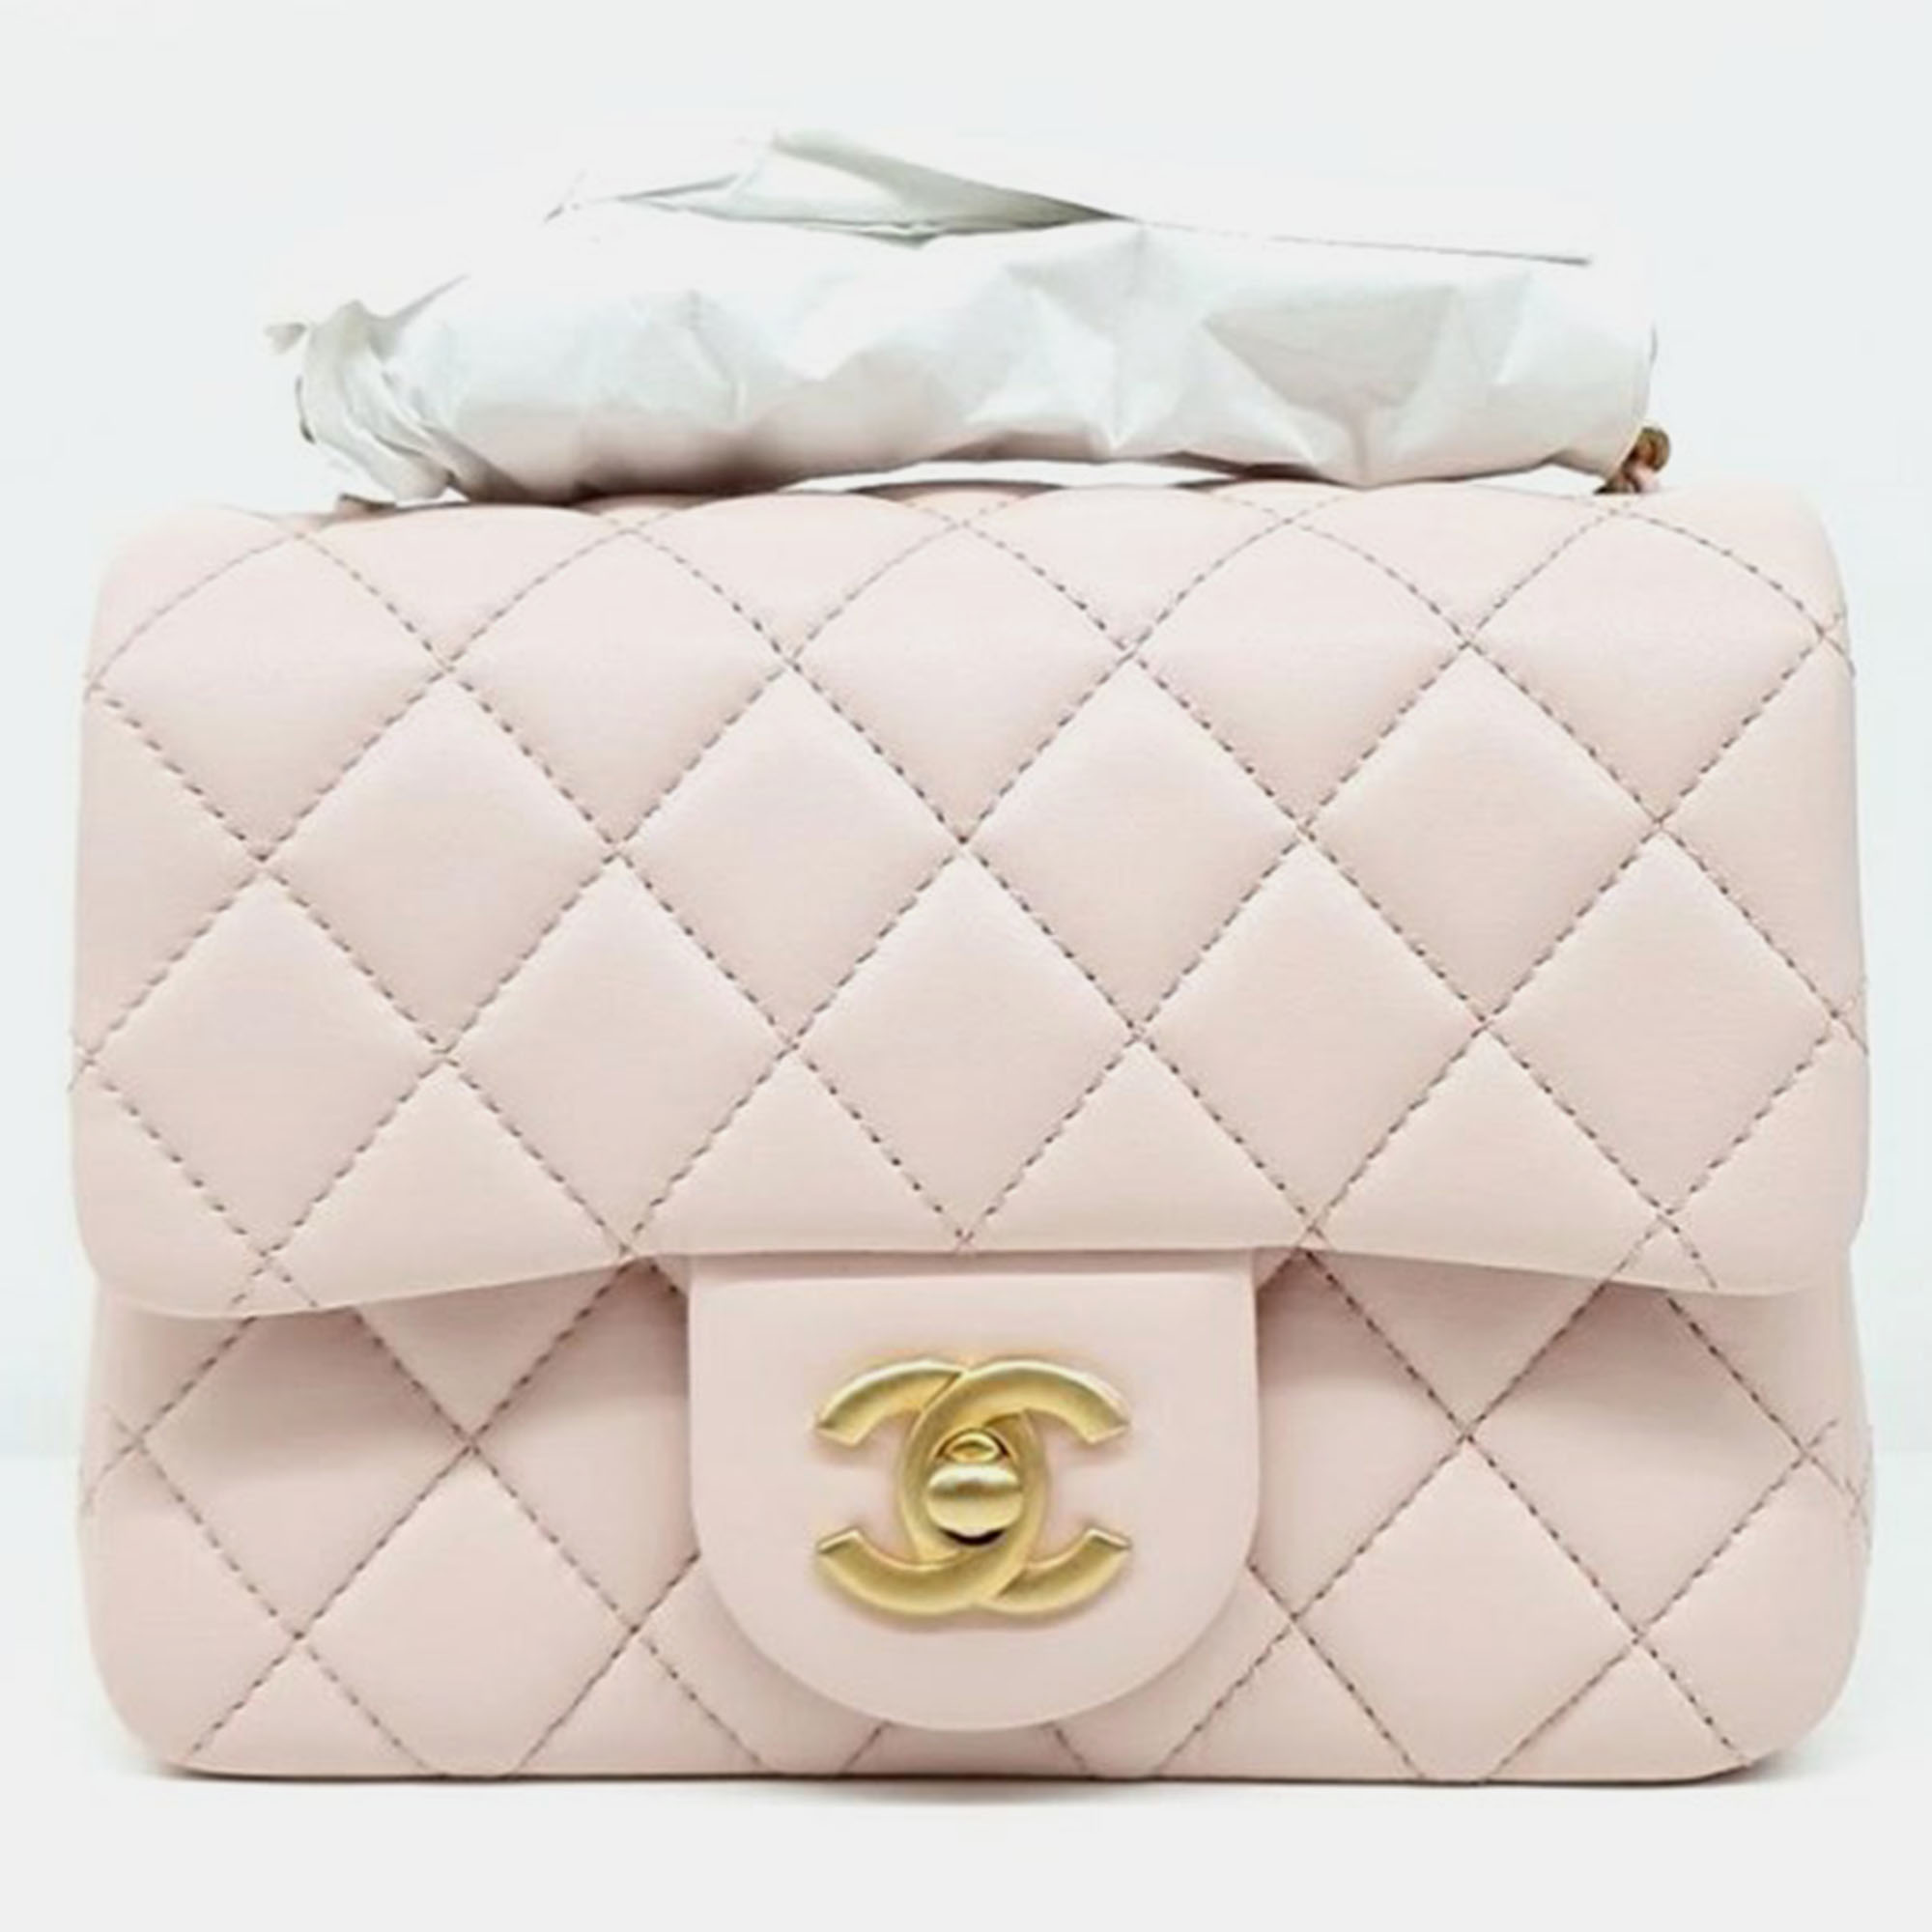 Chanel beige leather flap bag